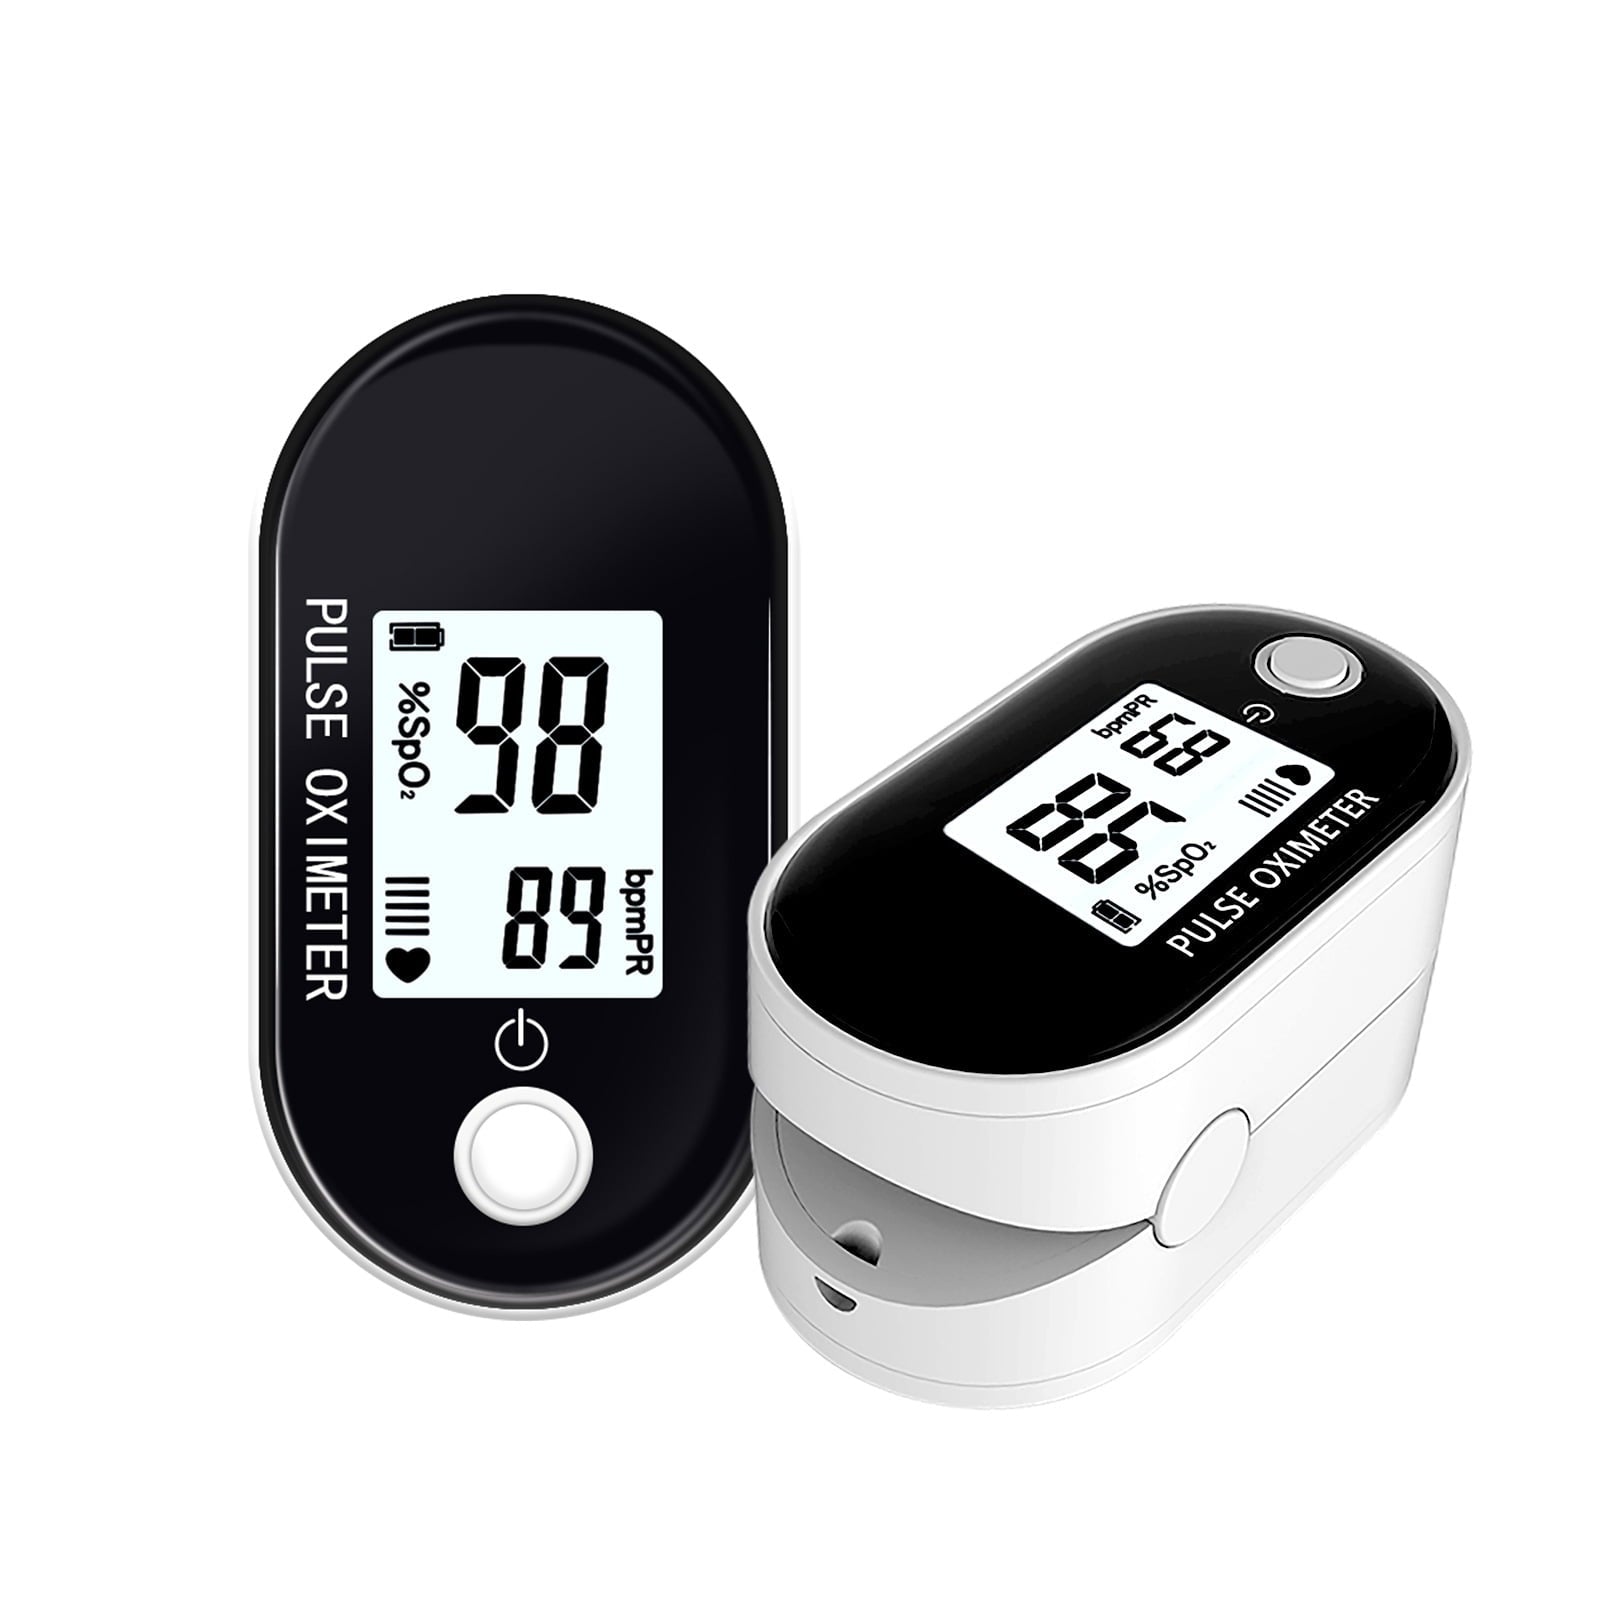 Pulse Oximeter, Heart Rate Monitor, Portable Pulse Oximeter for Sport Travel Home